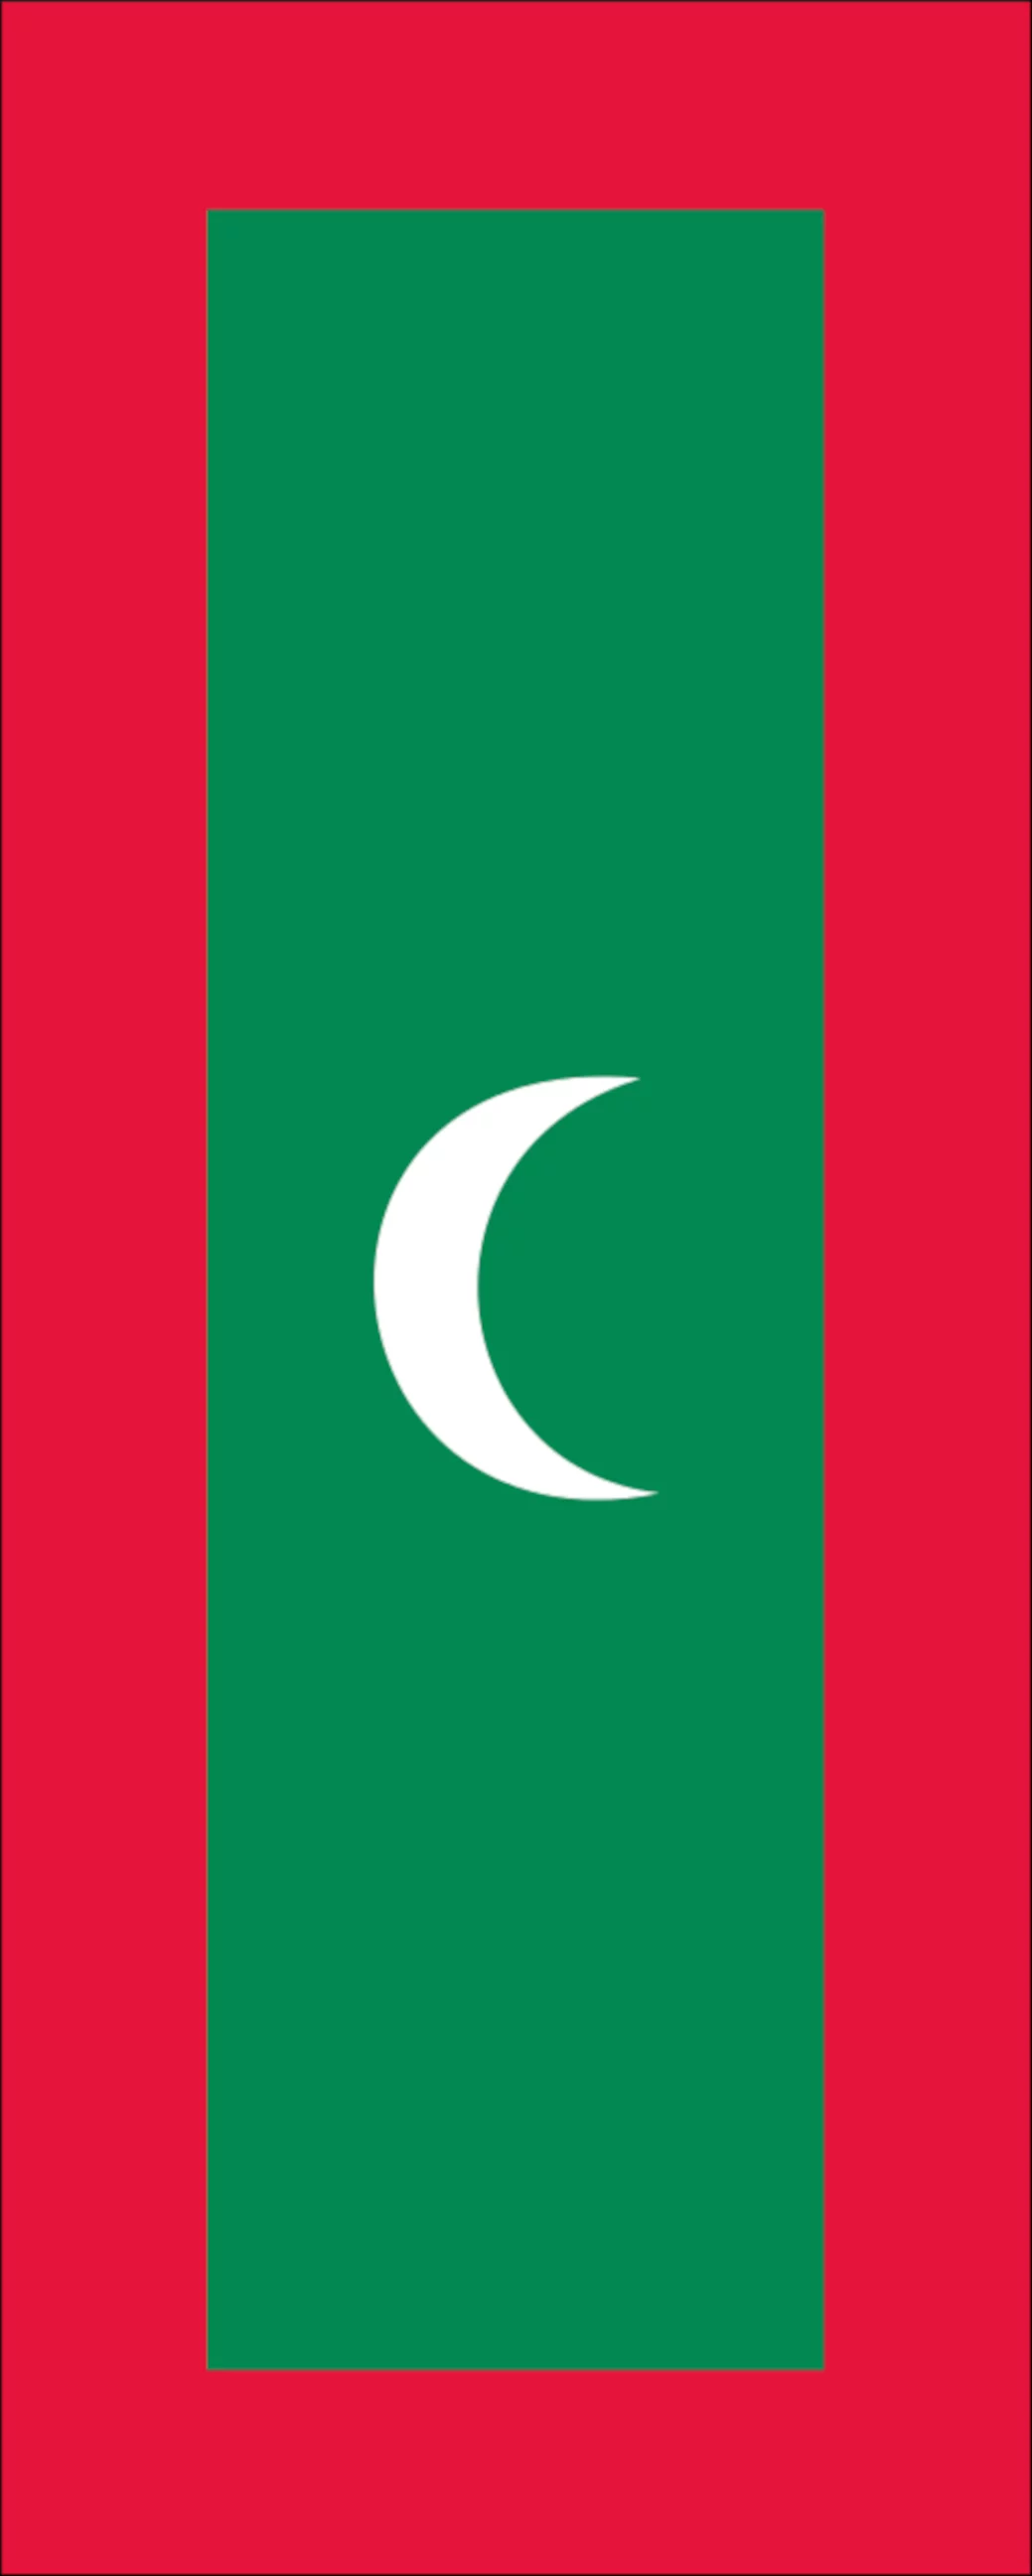 Flagge Malediven